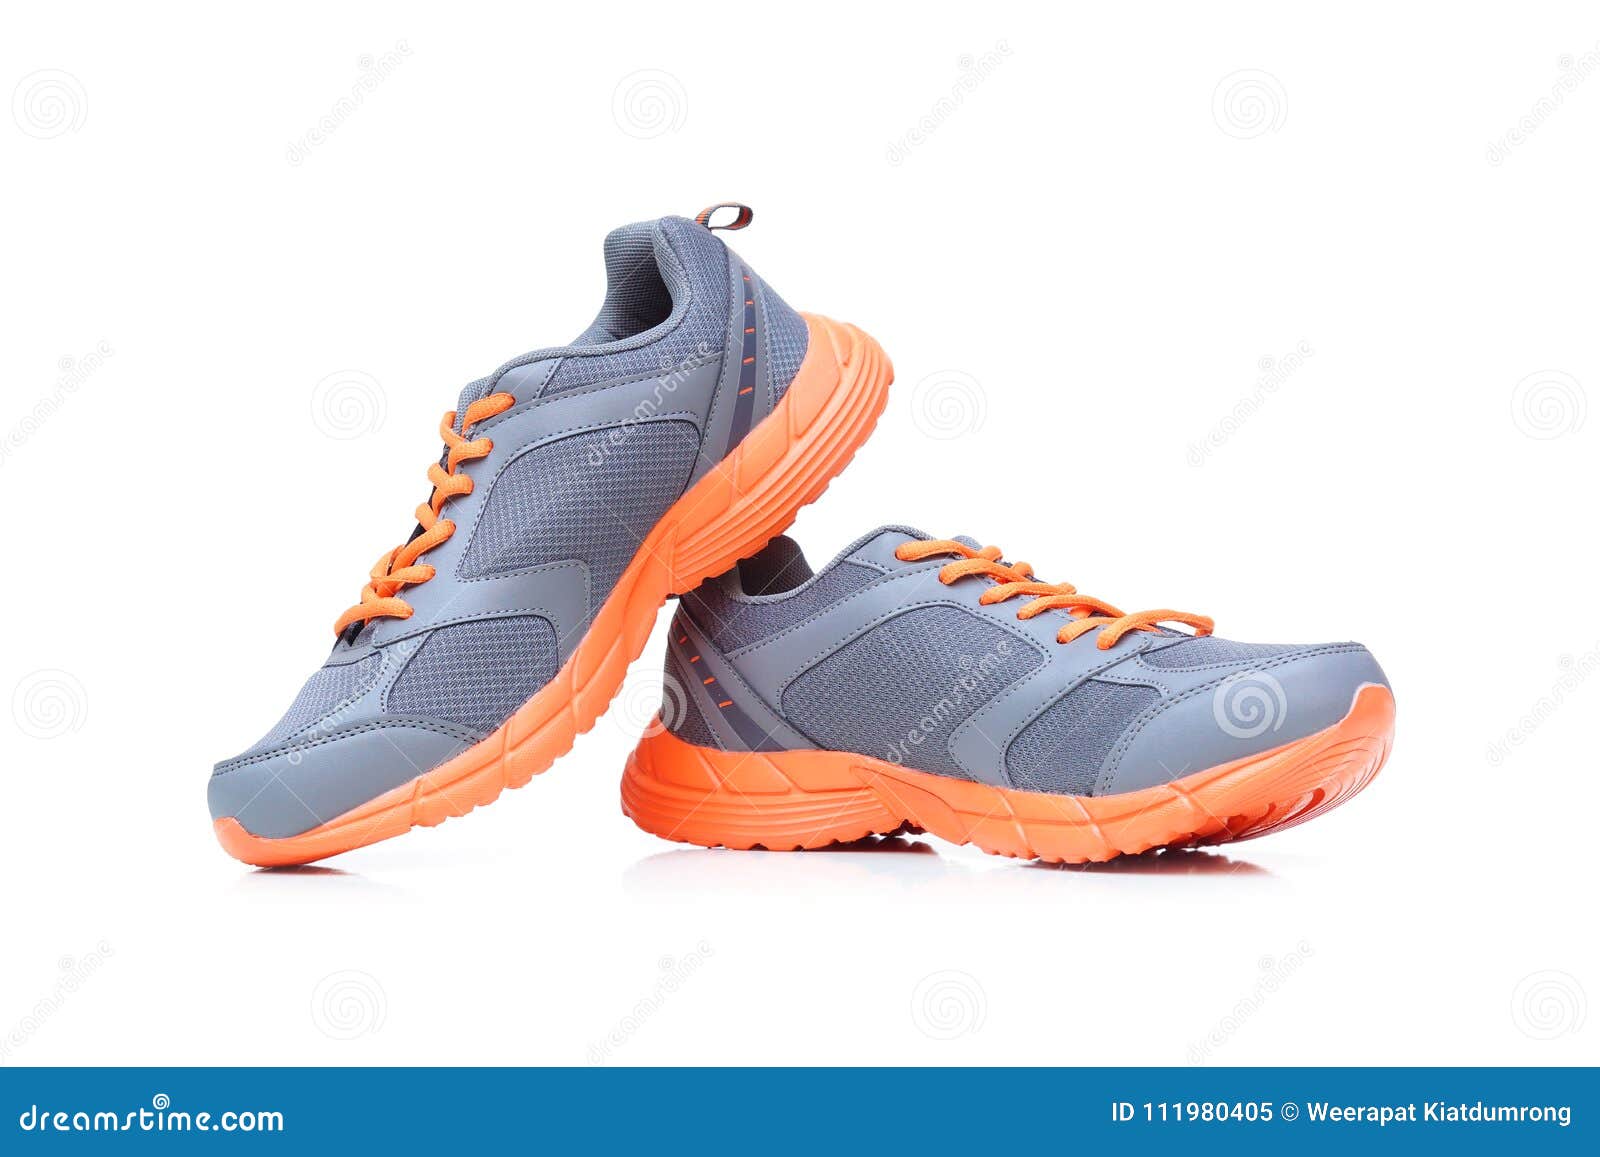 Running shoes stock image. Image of sneaker, orange - 111980405